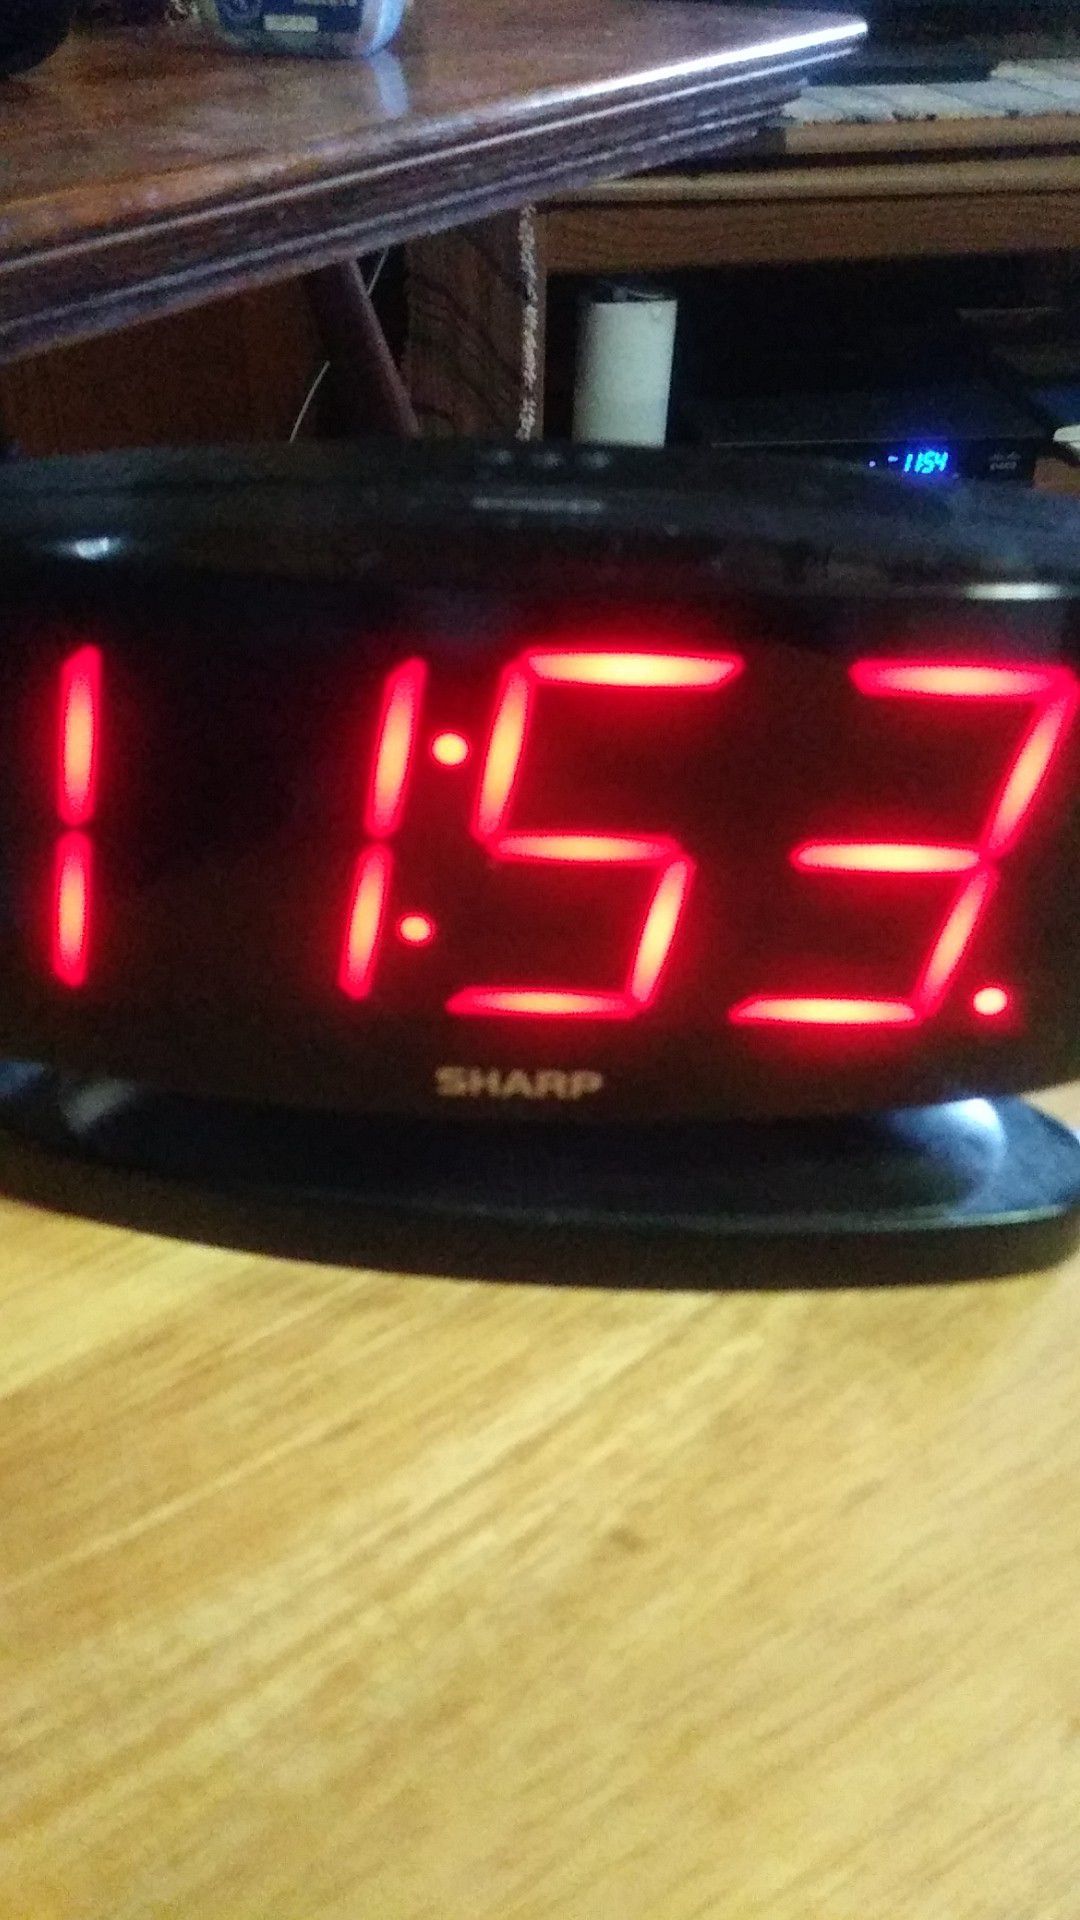 Sharp Alarm Clock